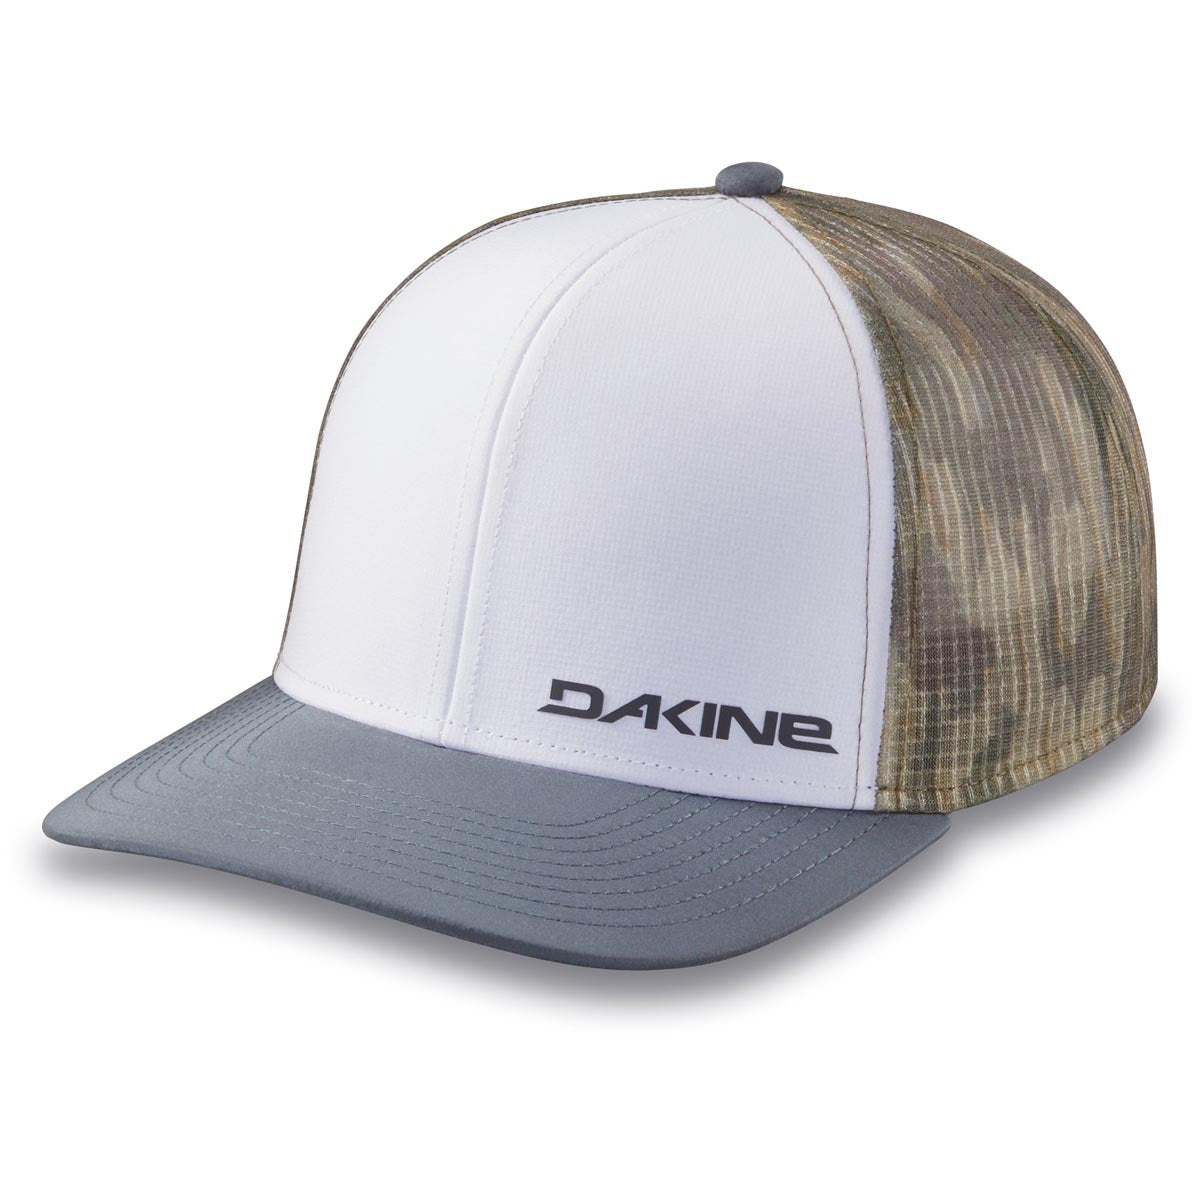 Dakine Core Badge Ball Hat - Bright White image 1